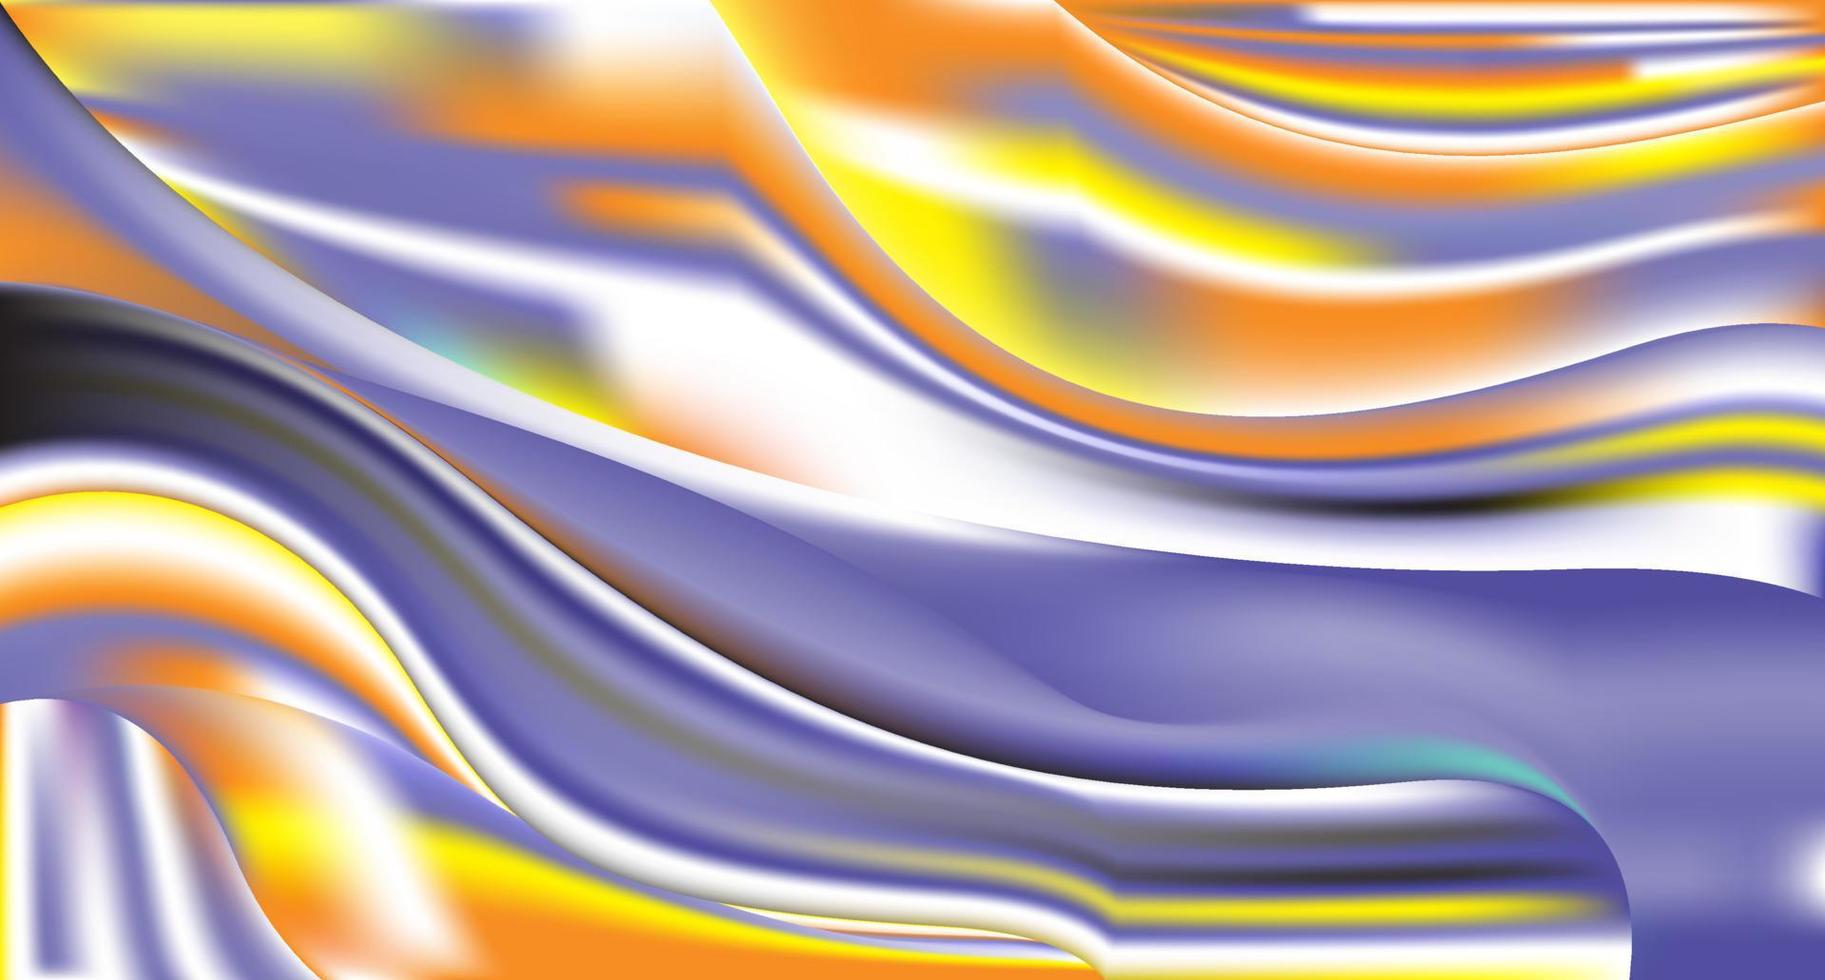 Colorful Wave Background Template Design For Website Background, Business Presentation vector